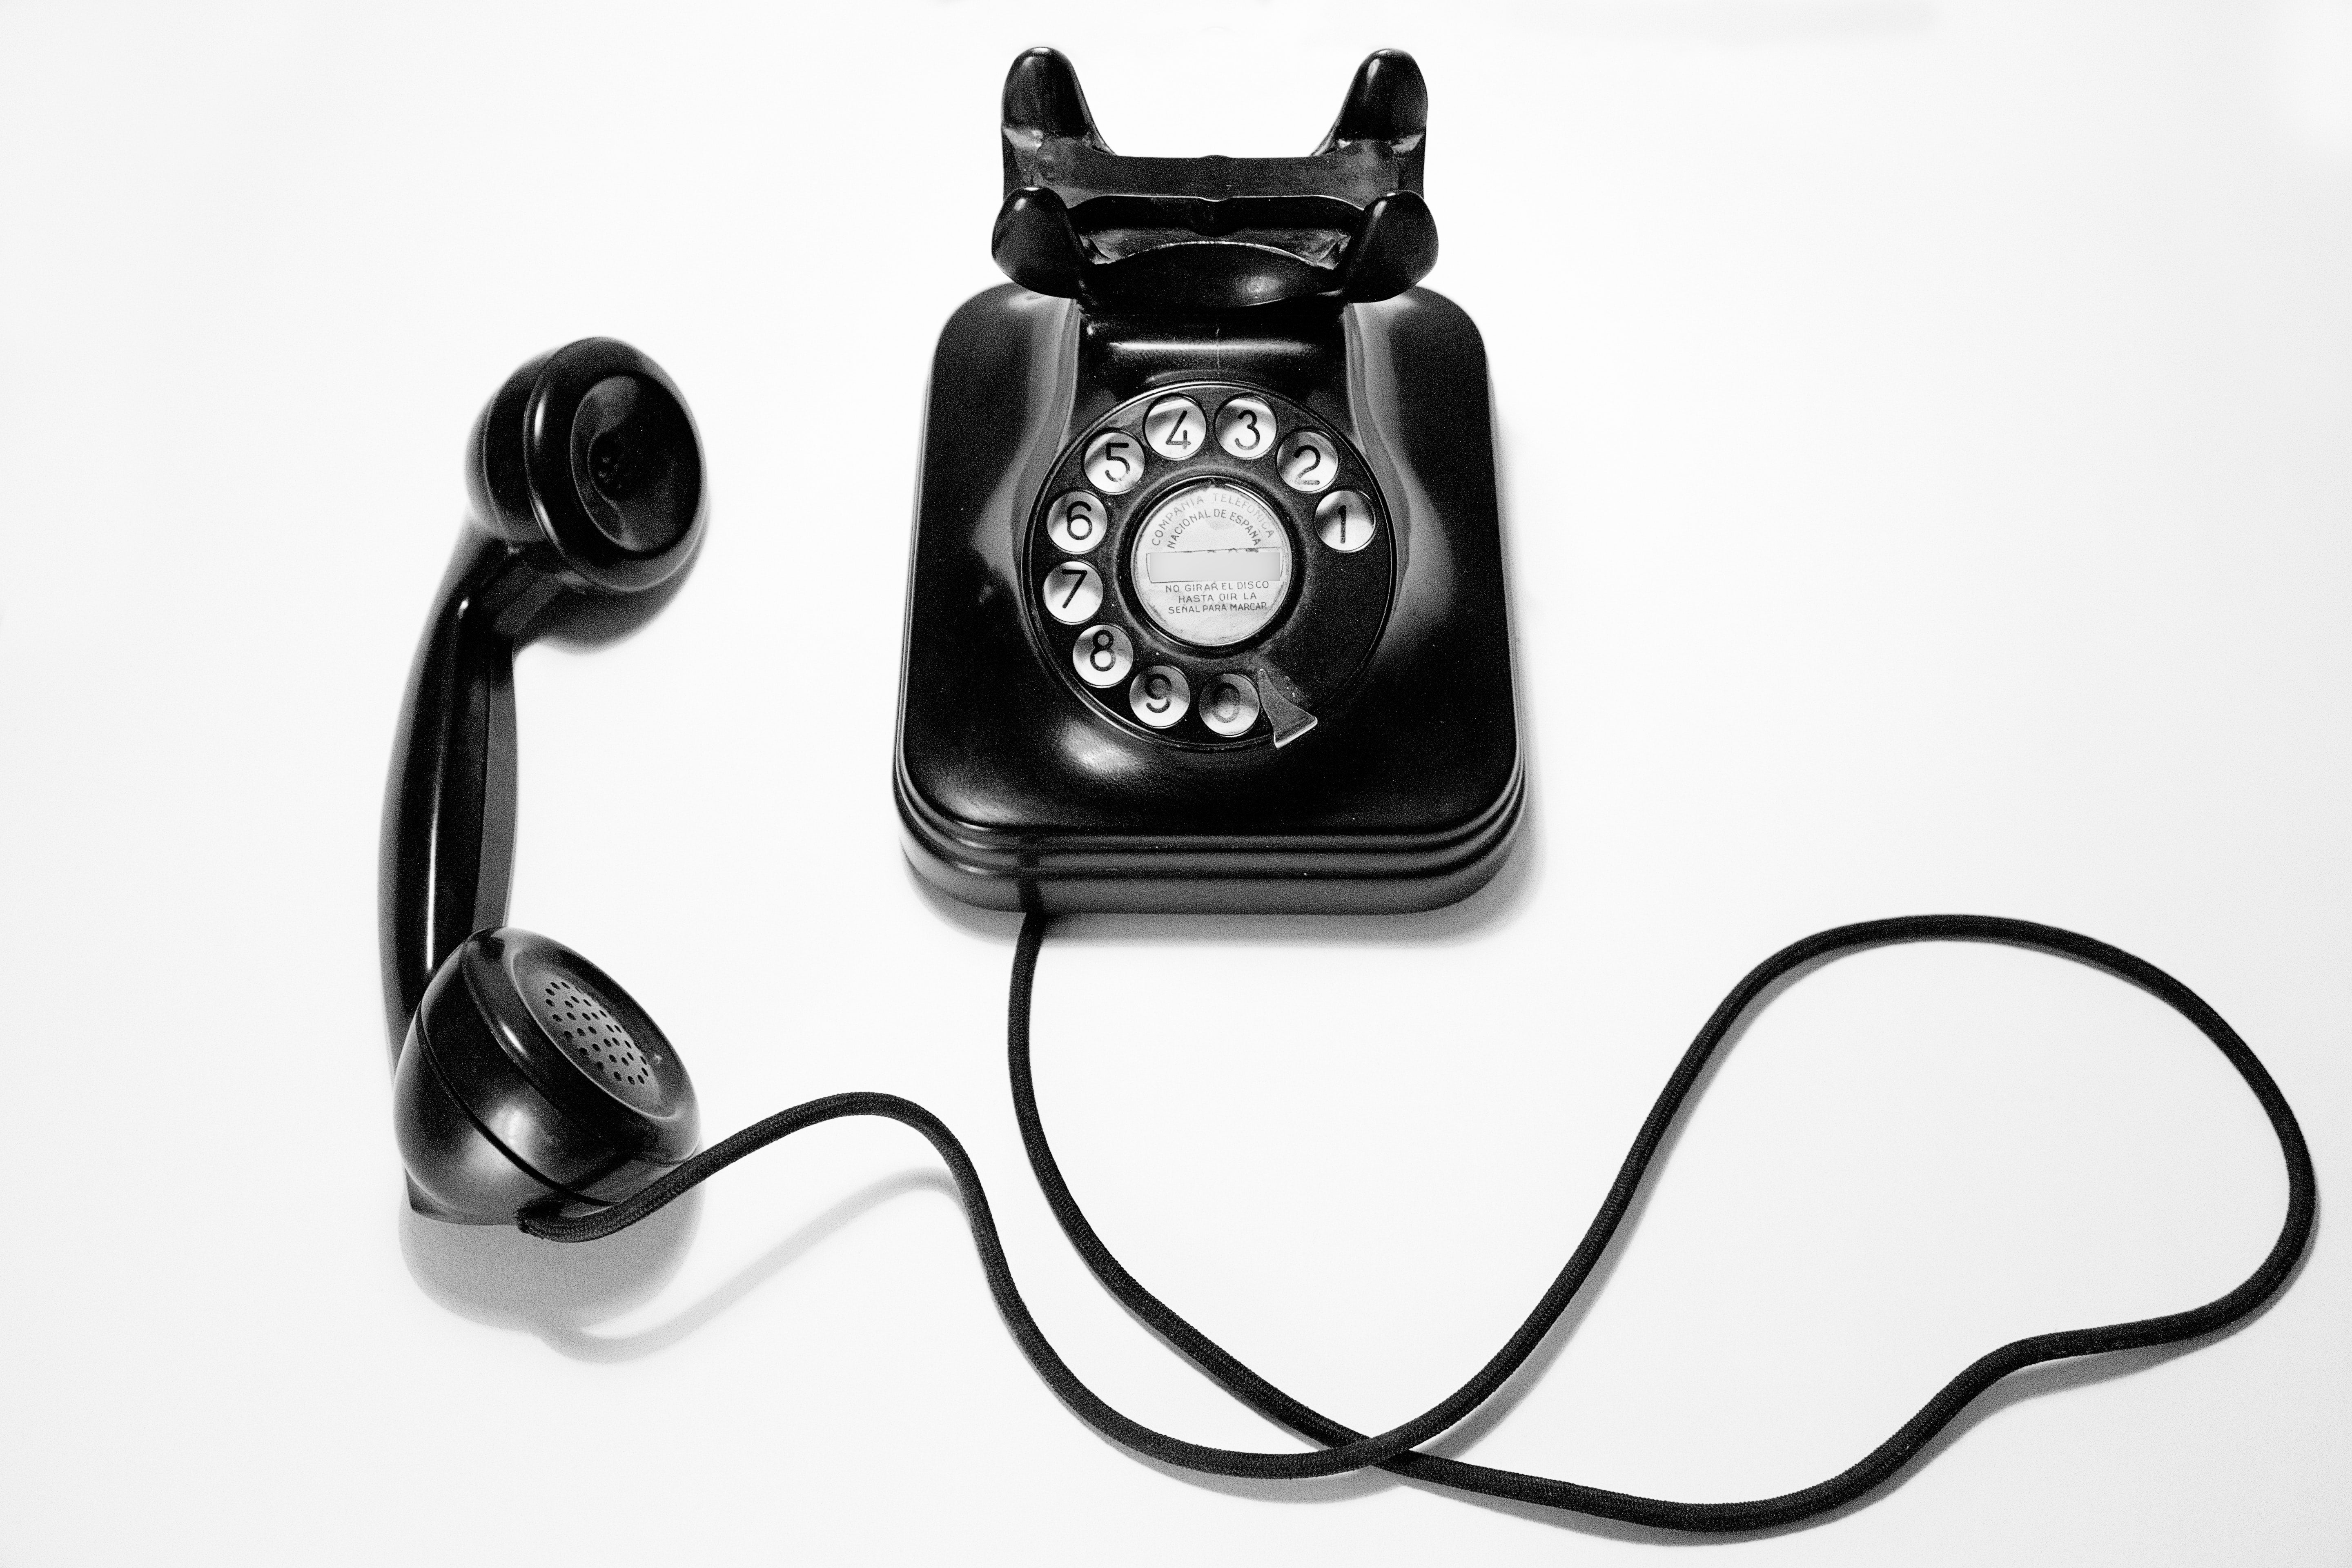 A black rotary phone